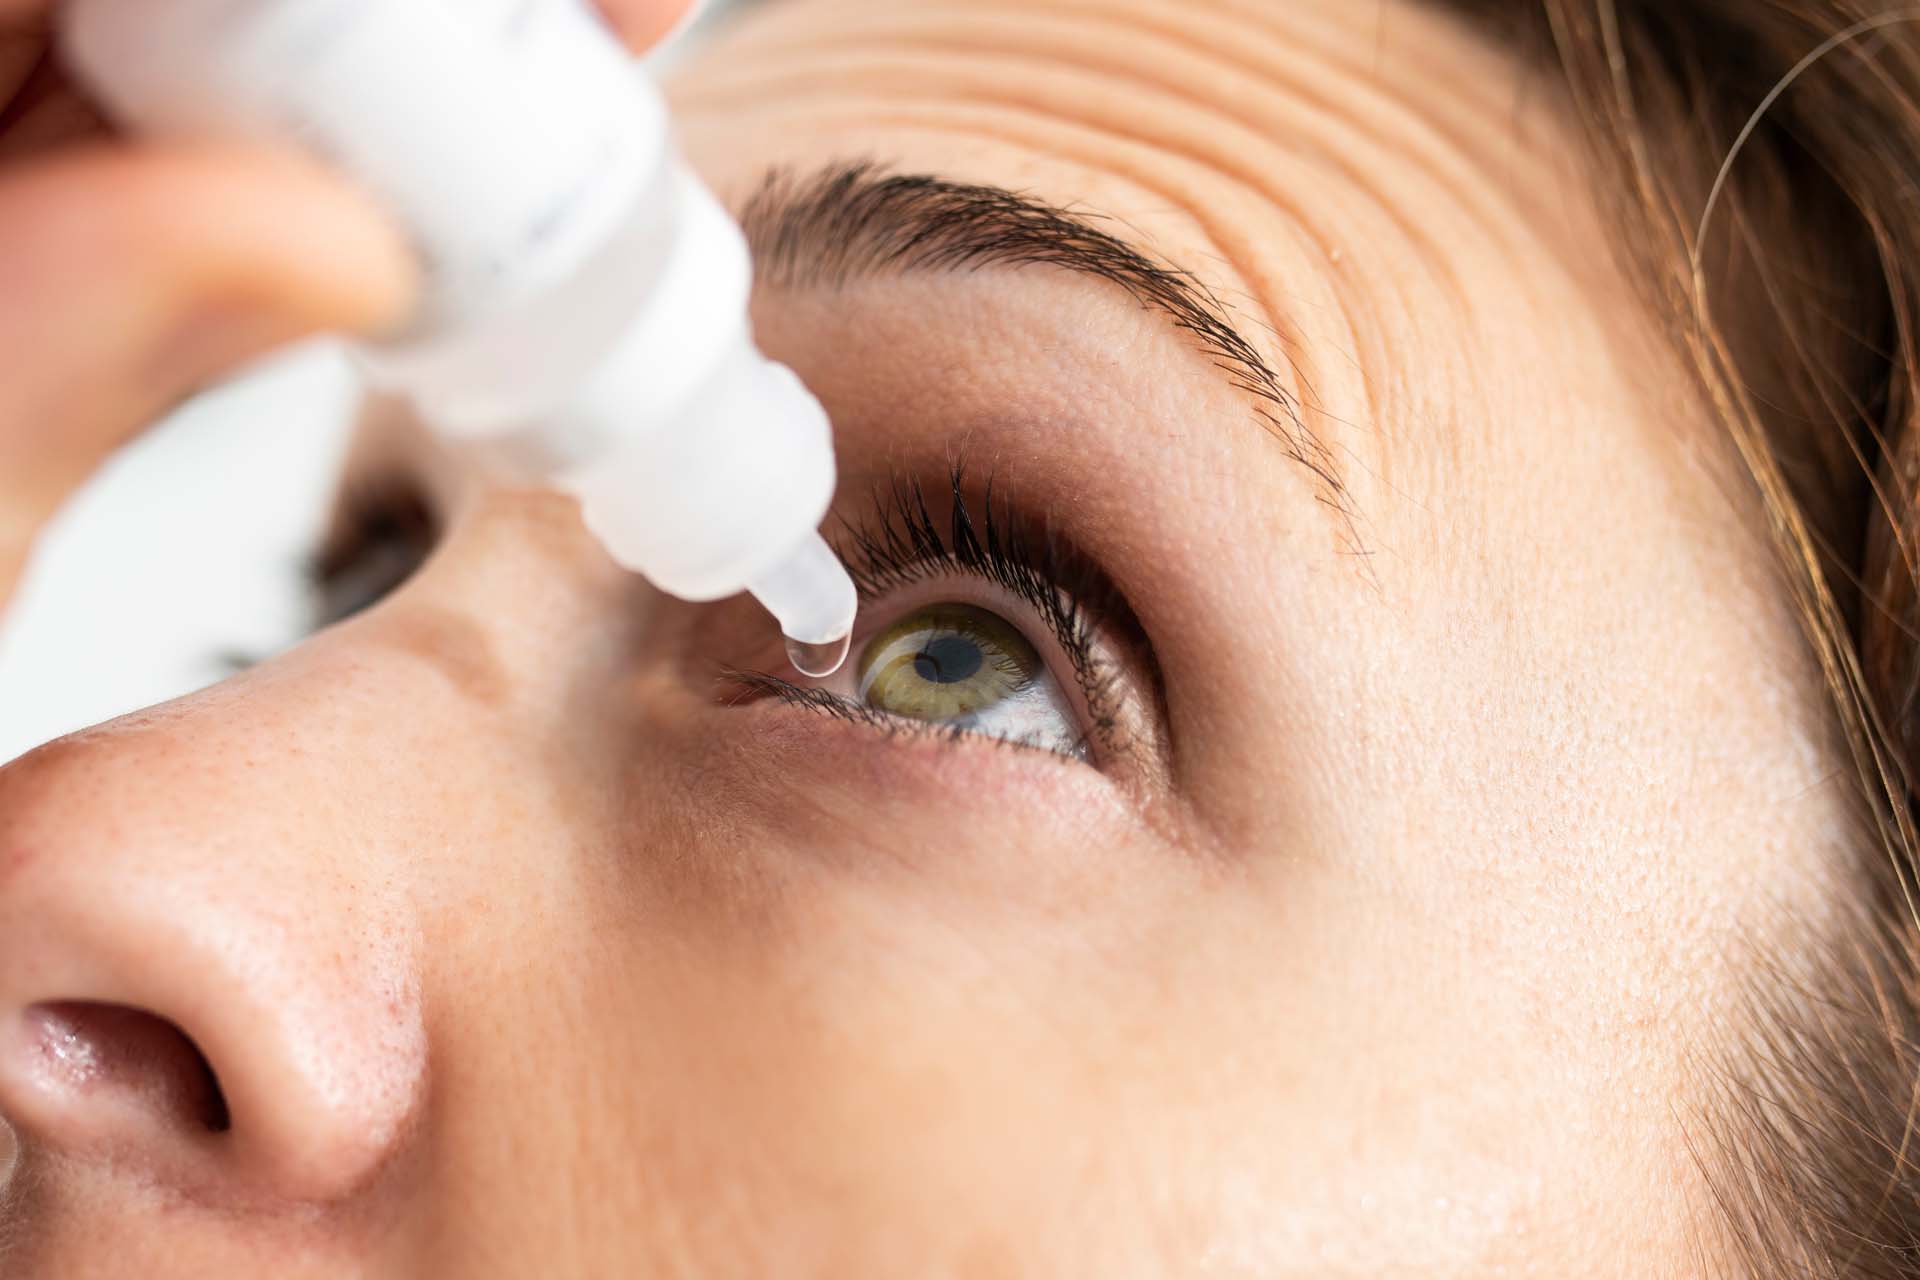 woman applying eye drops to her eyes for conjunctivitis or dry eyes. eye doctor prescription